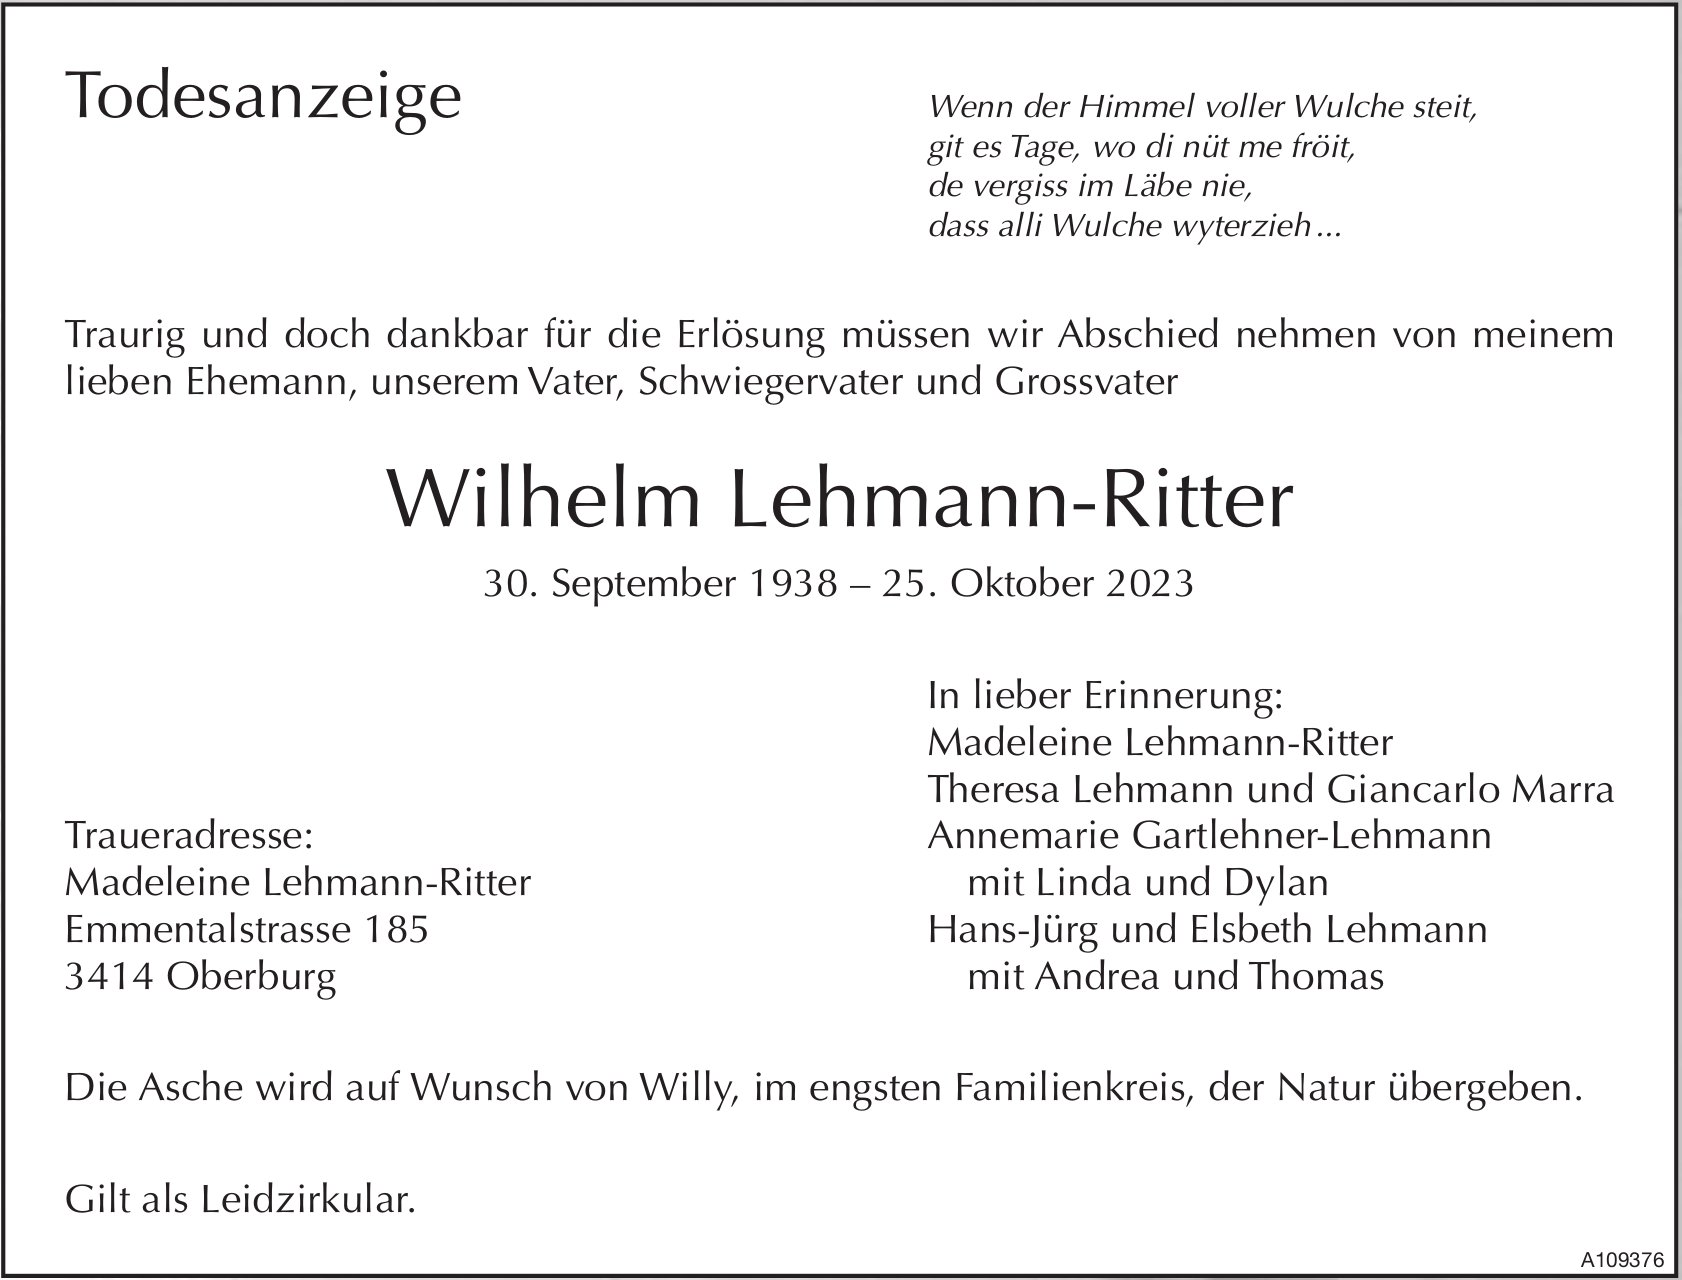 Wilhelm Lehmann-Ritter, Oktober 2023 / TA